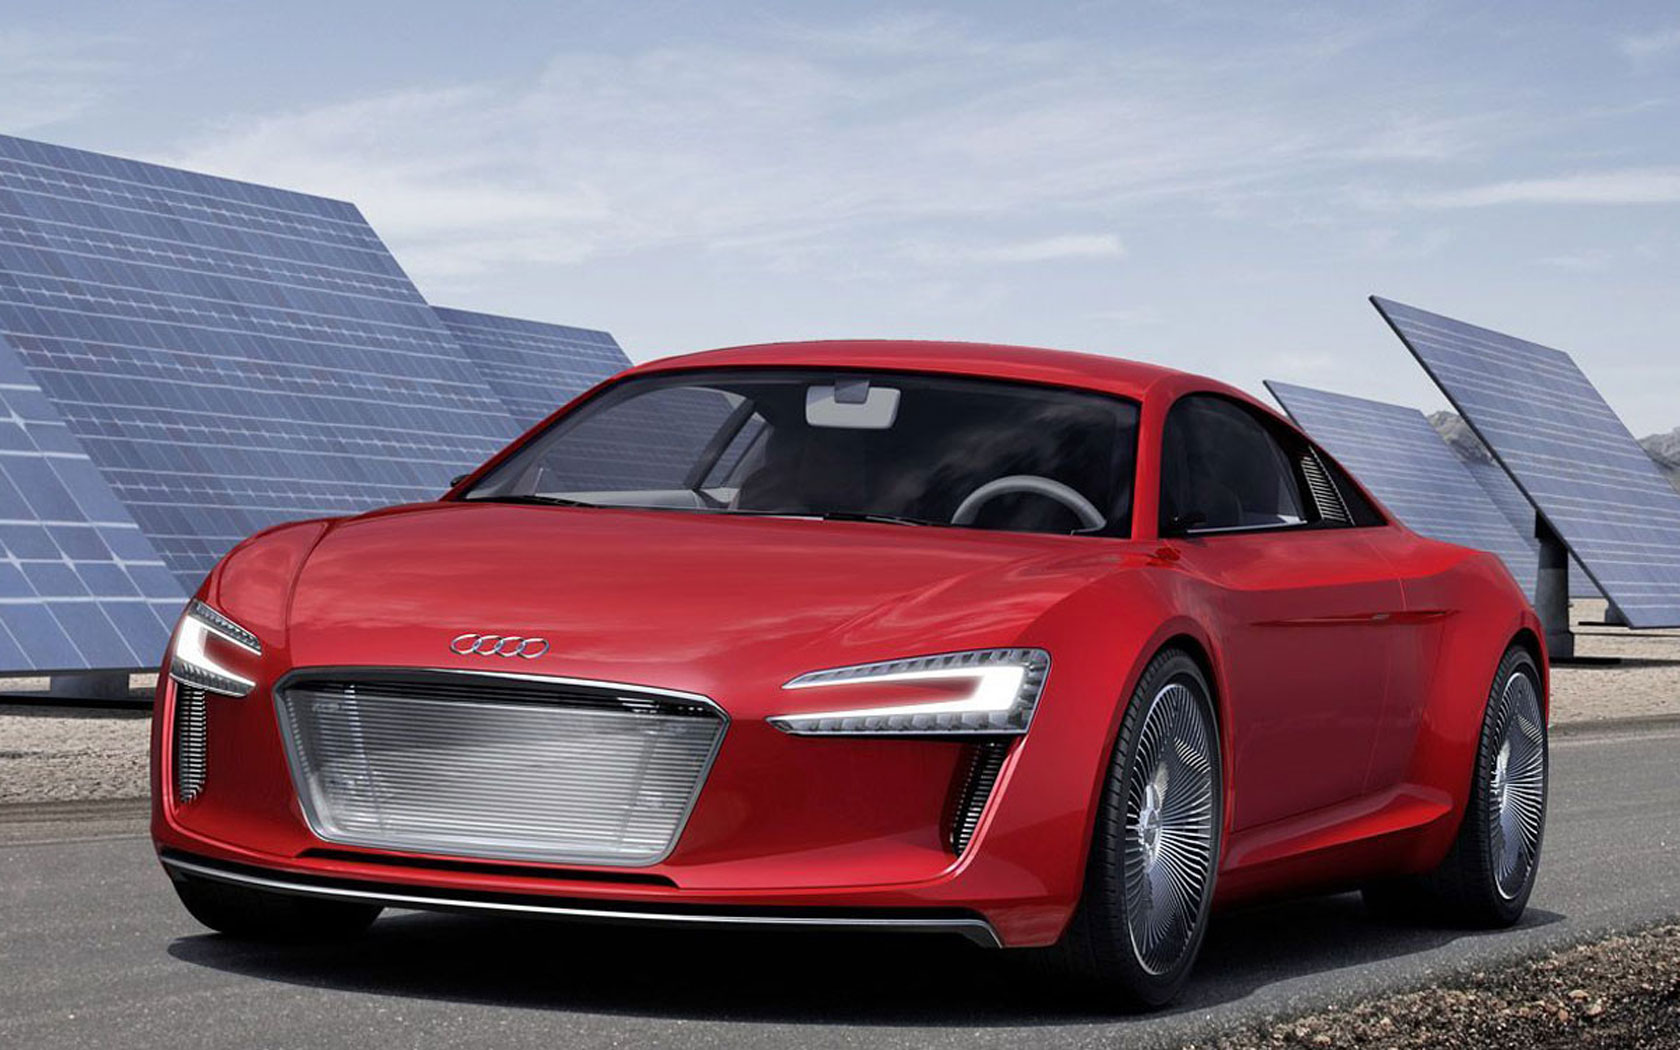  Audi E-tron Concept (2009)